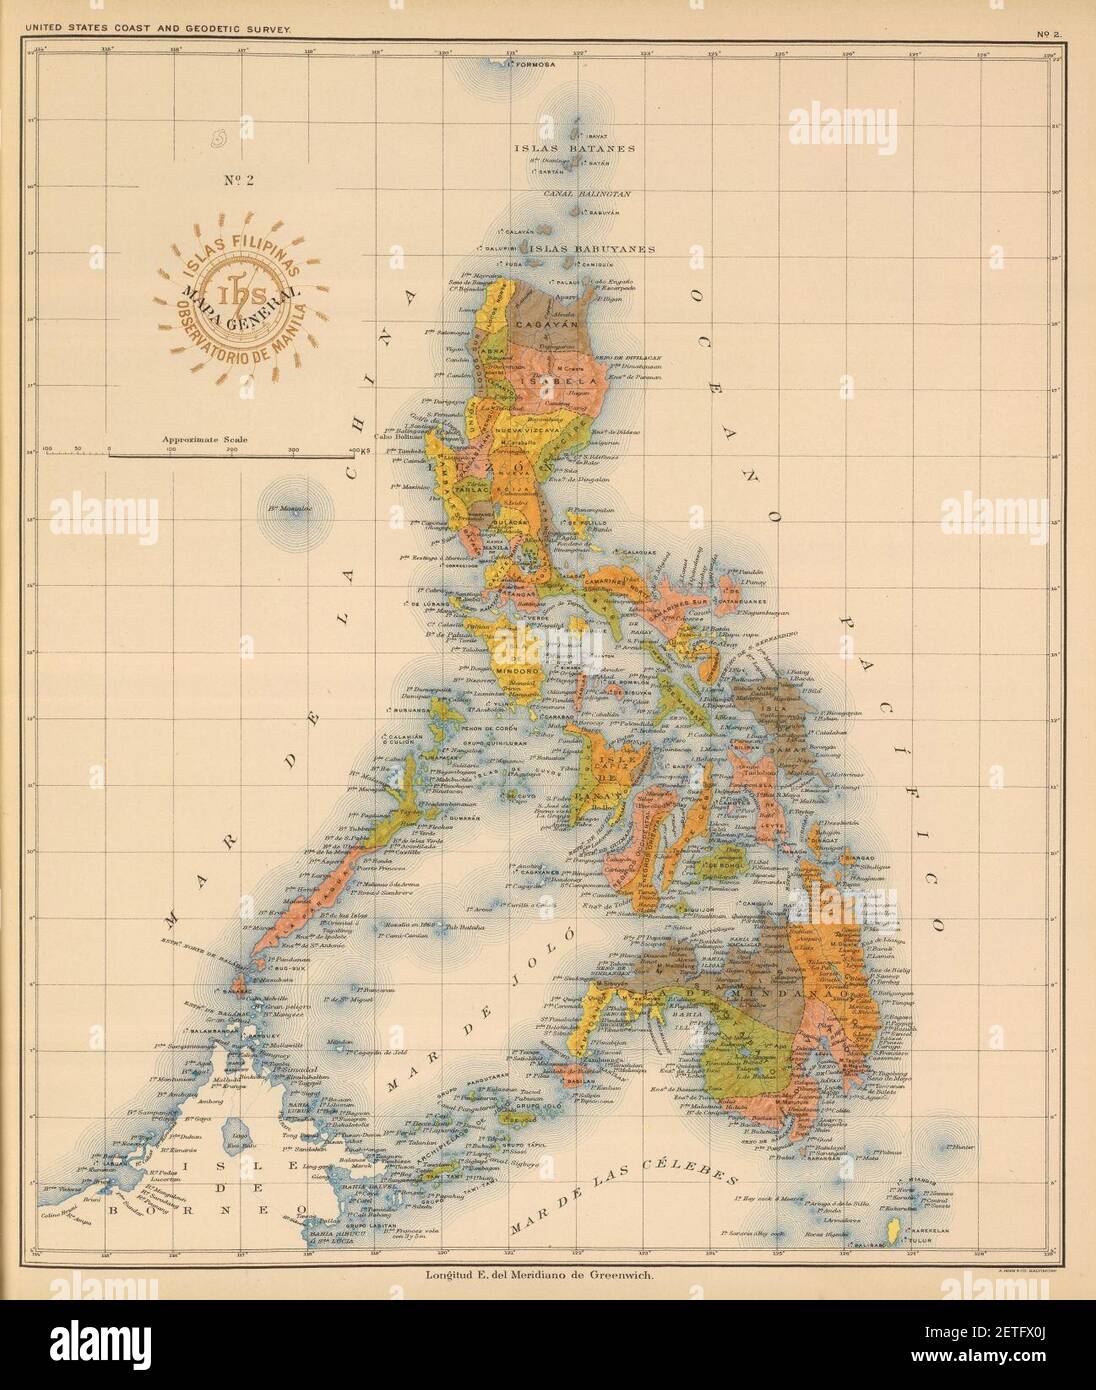 Philippine Islands - 1899 political map. Stock Photo